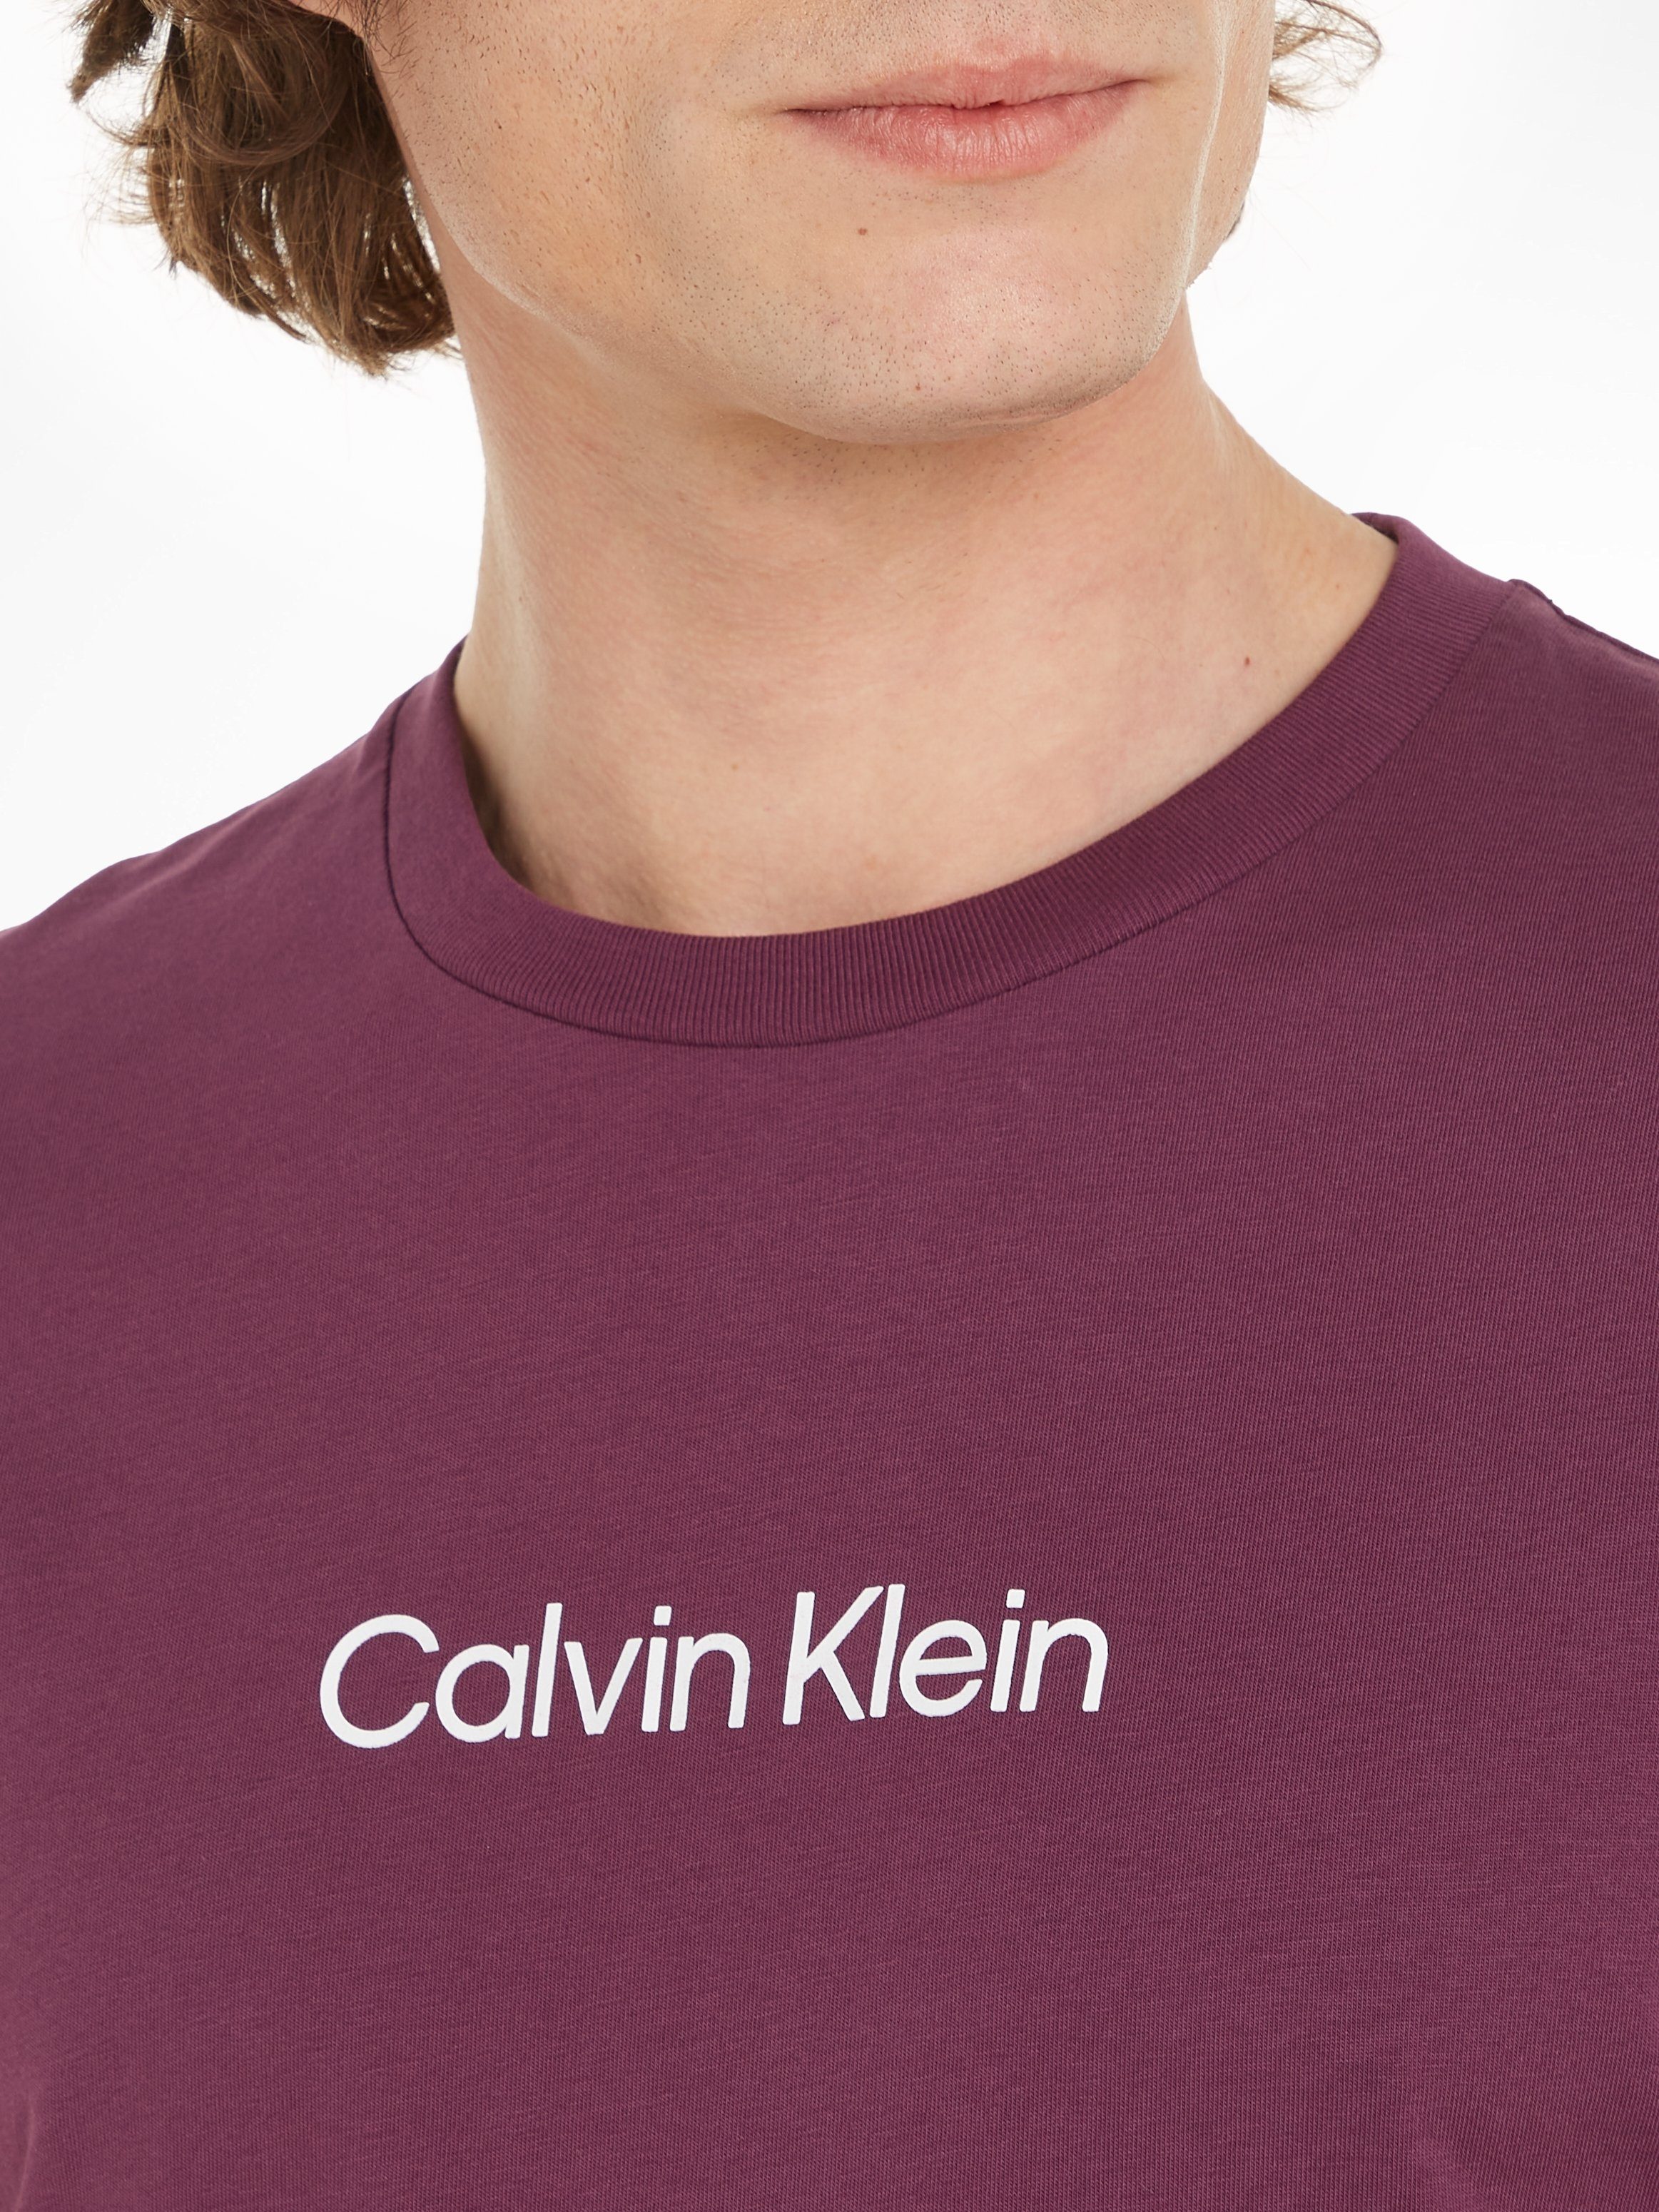 T-Shirt mit LOGO Plum Italian HERO Calvin Klein Markenlabel COMFORT aufgedrucktem T-SHIRT